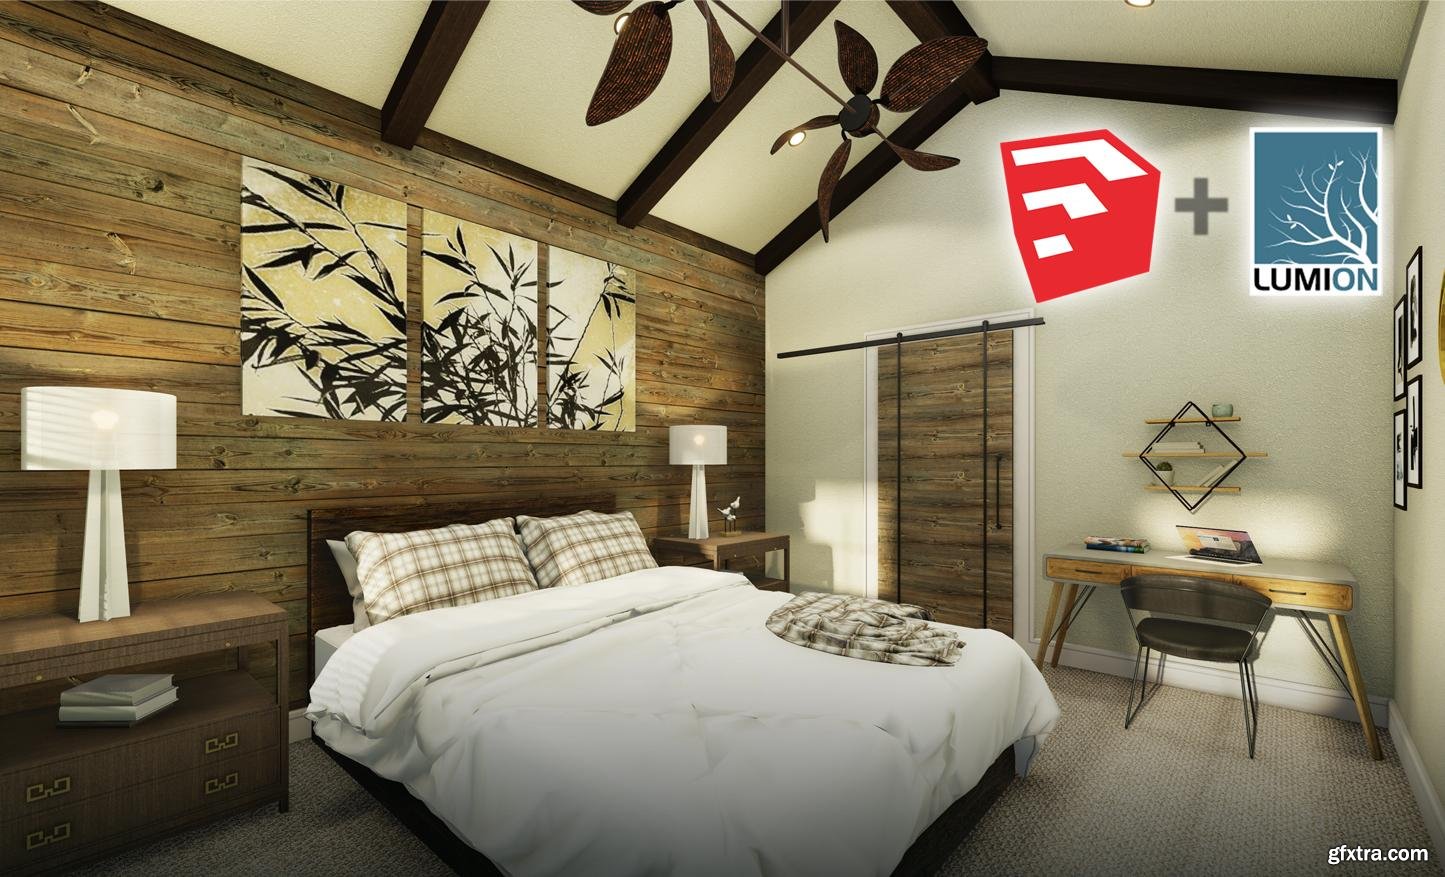 Interior Room Design with SketchUp 2020 » GFxtra